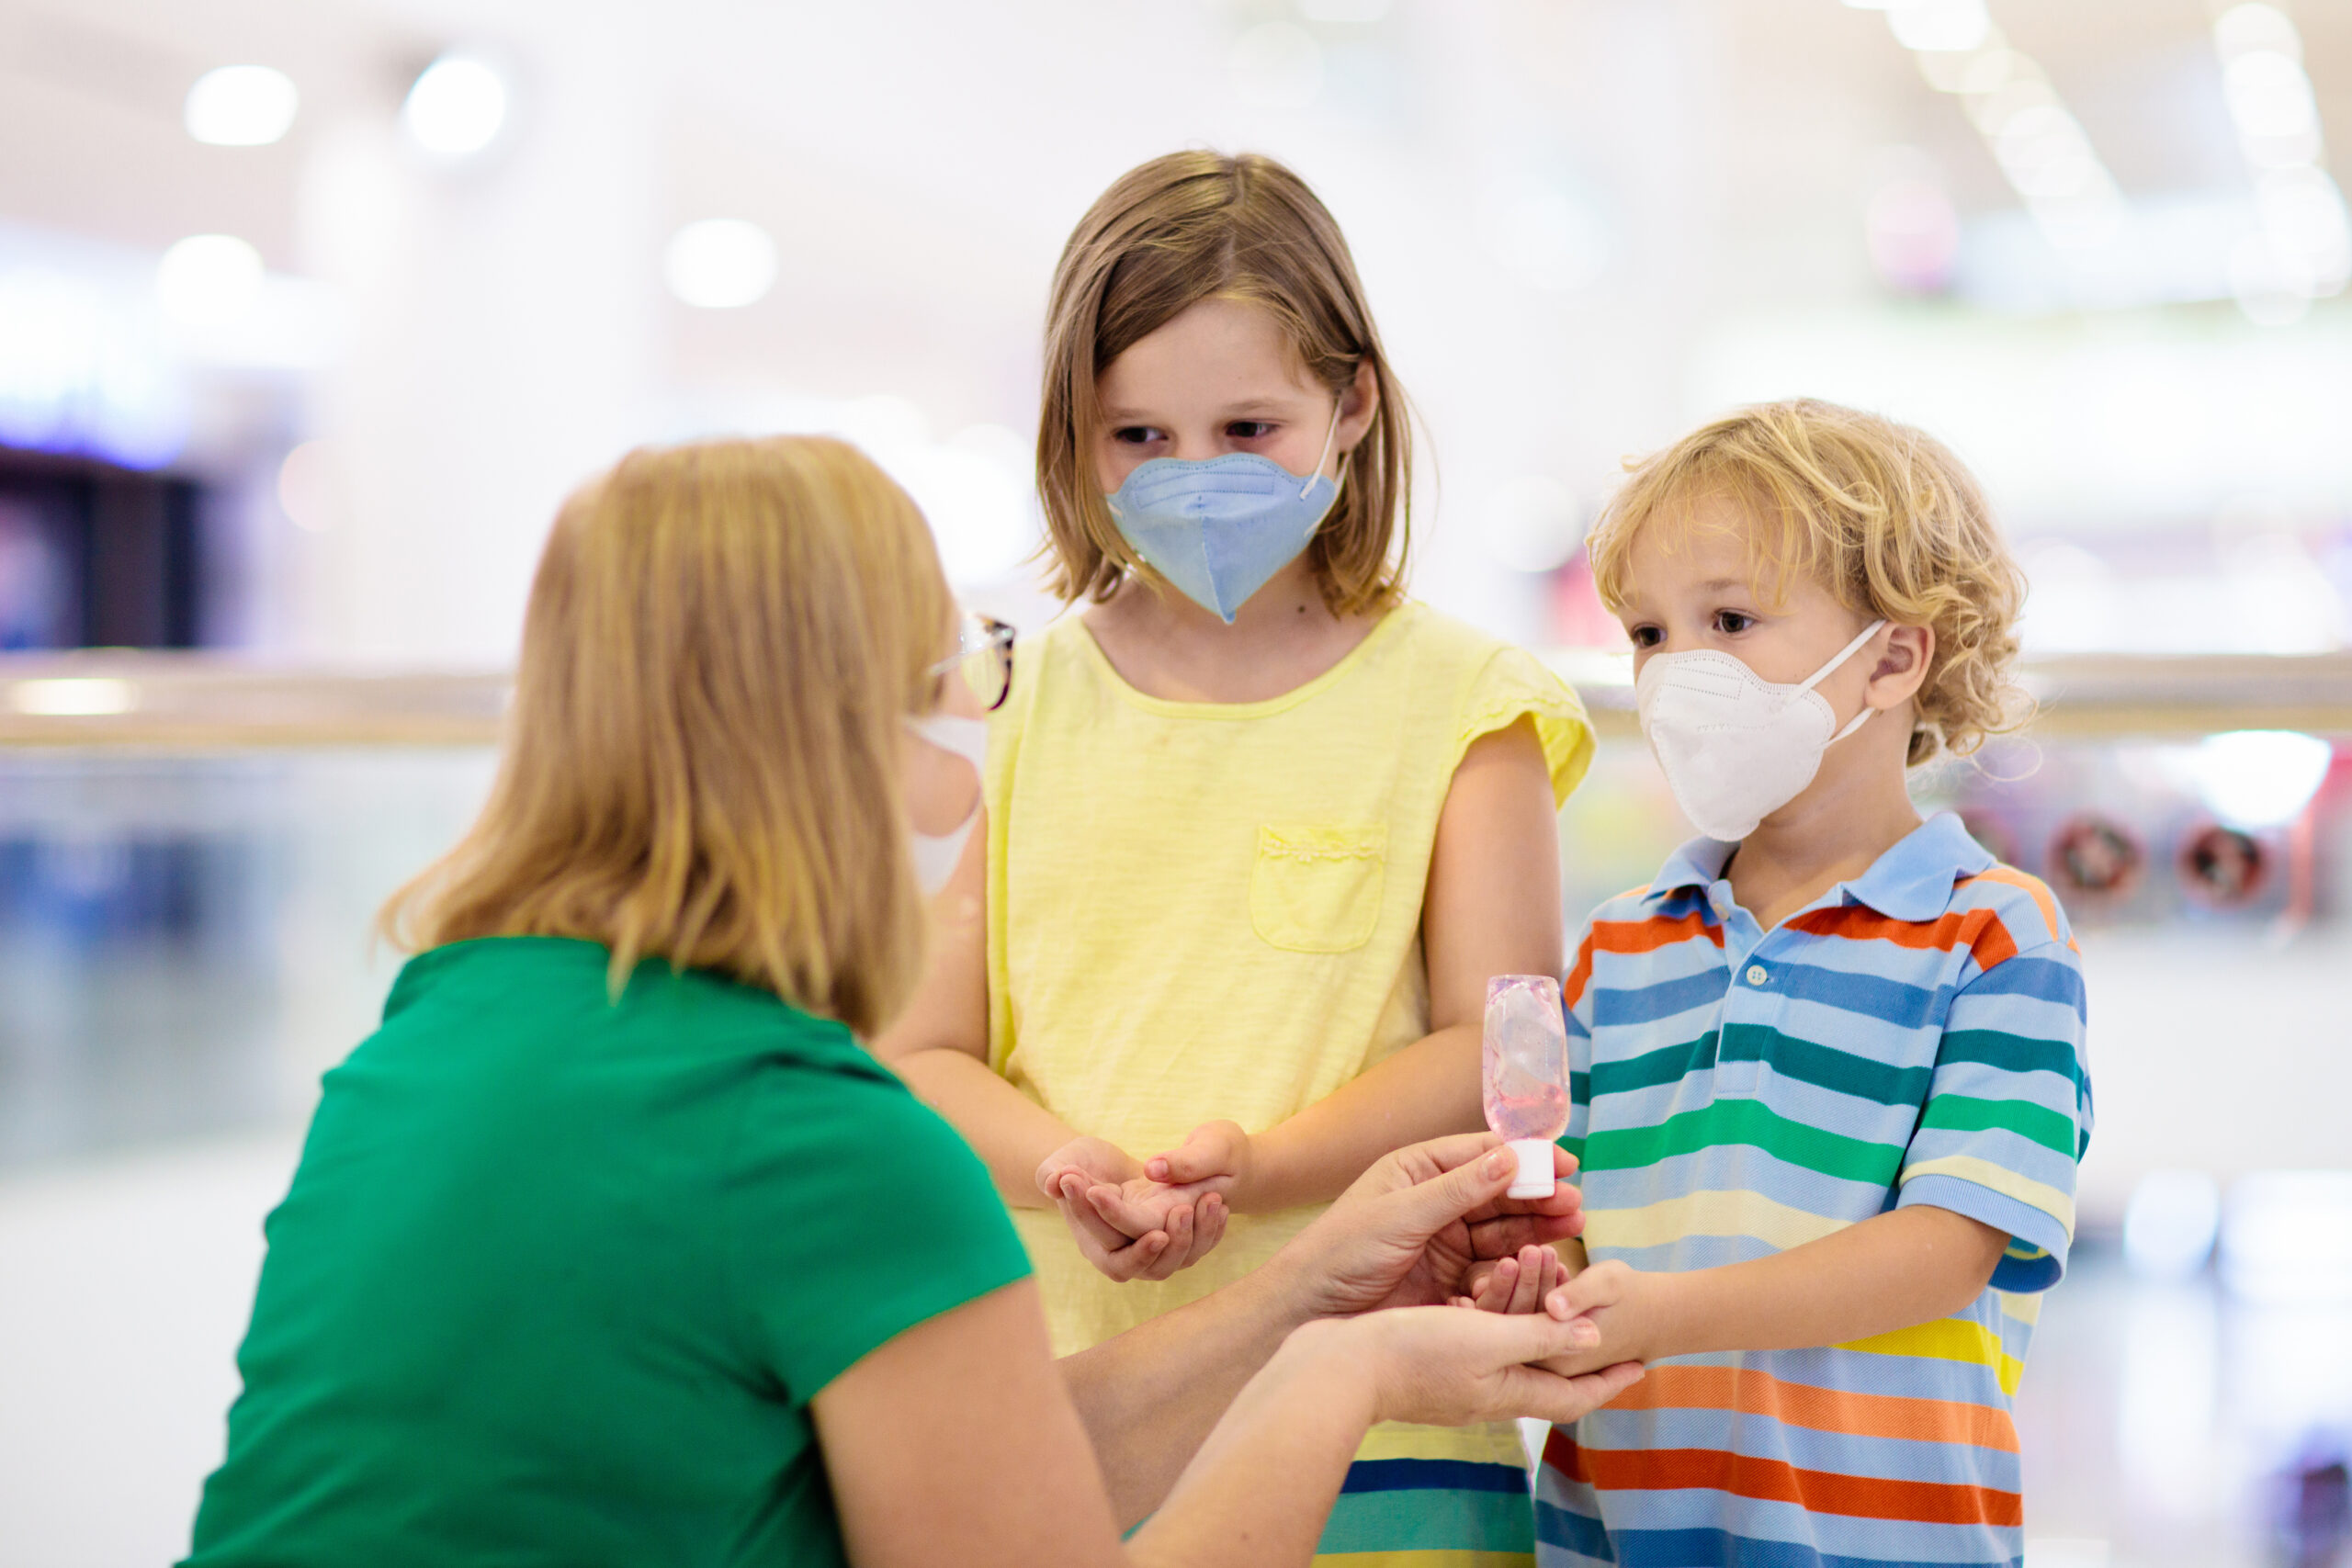 Children receiving hand sanitizer from adult